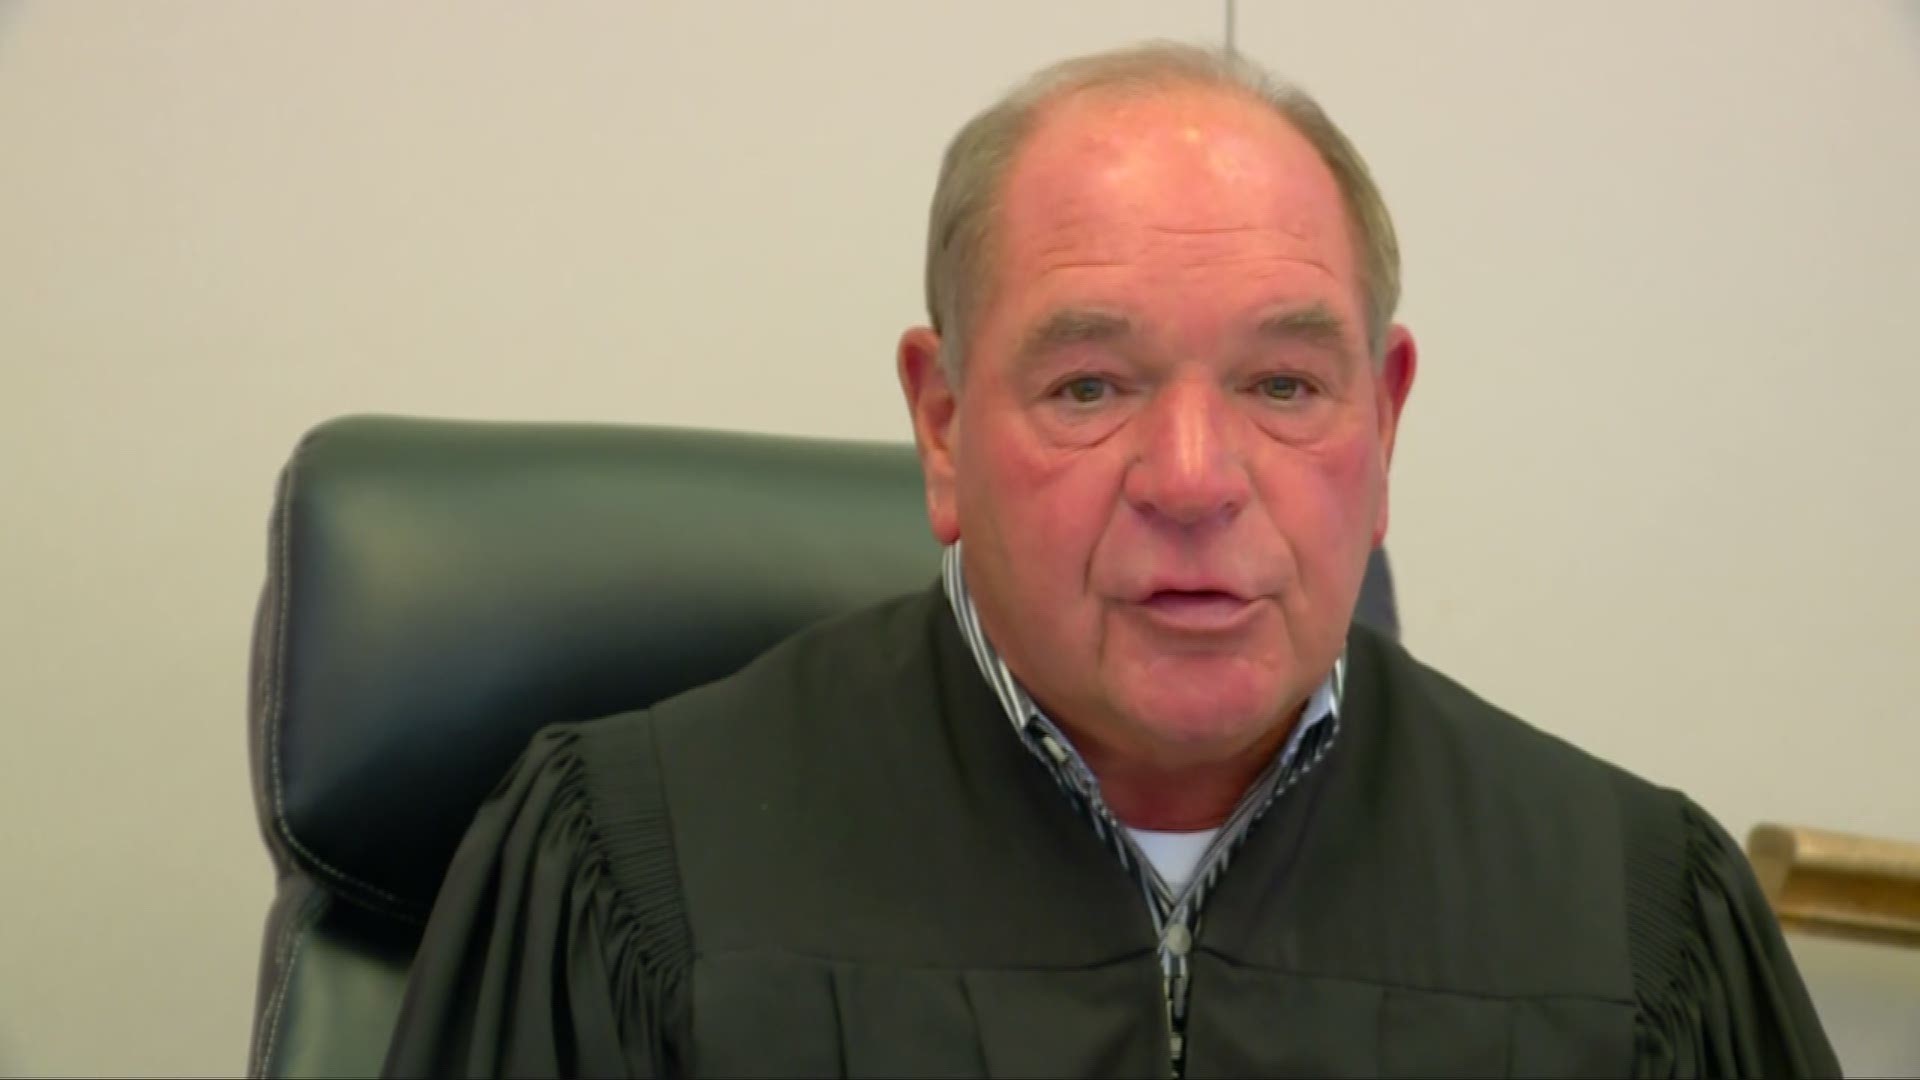 Lake County judge dispenses justice in unusual way